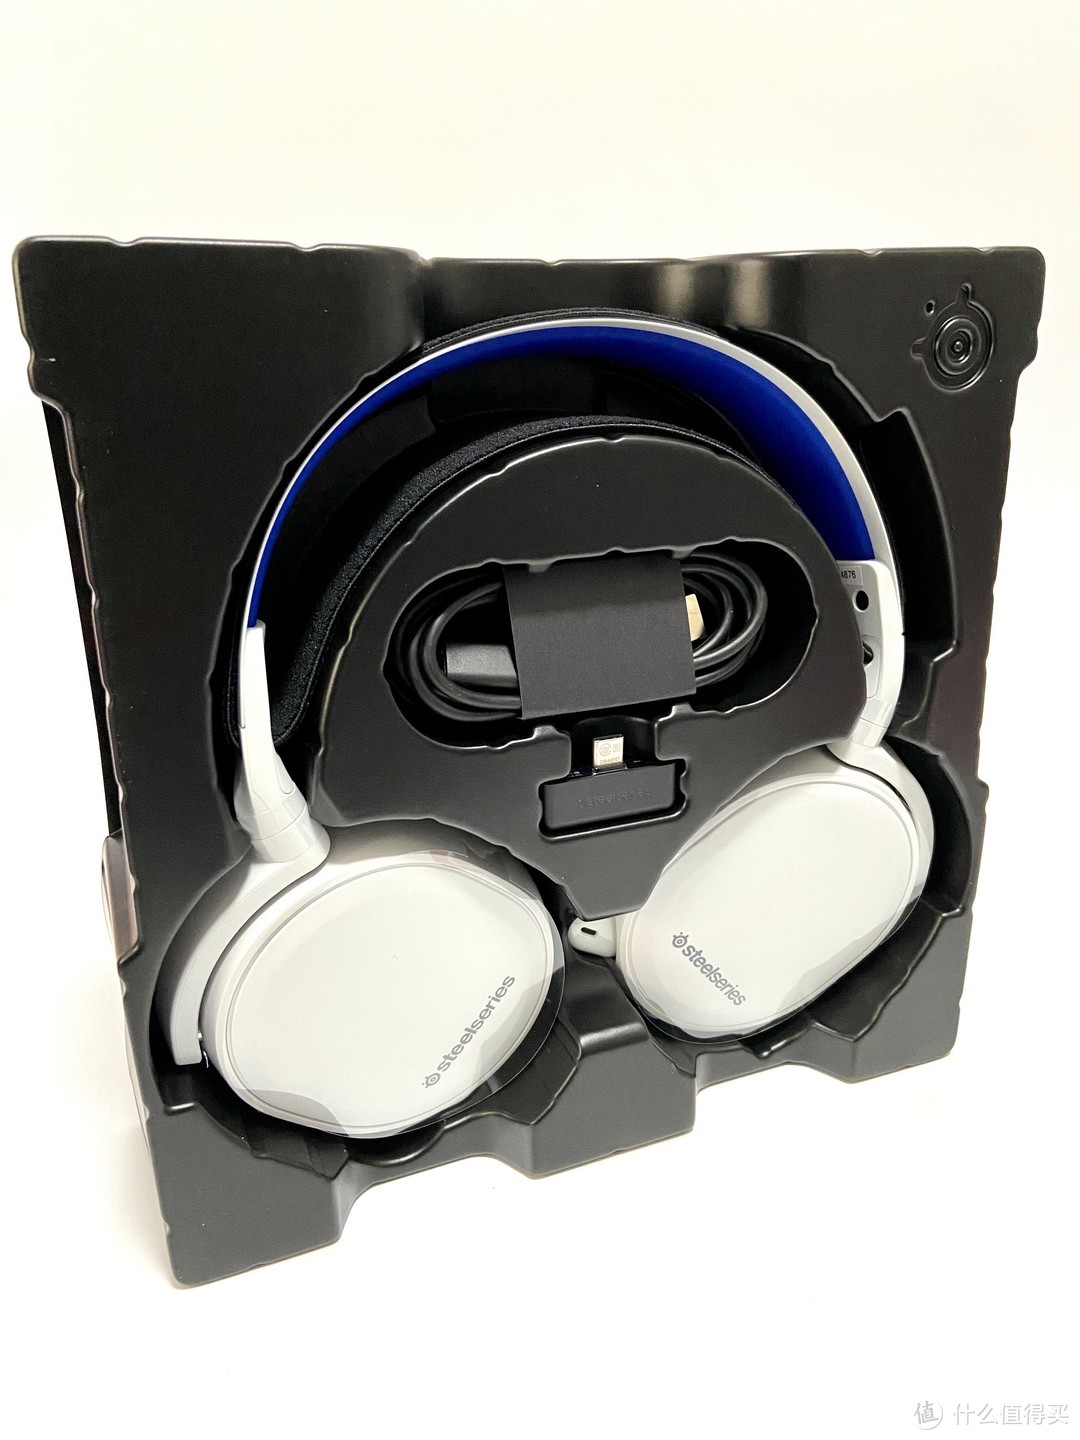 PS5官方认证无线耳机——赛睿寒冰7P+购买及使用分享